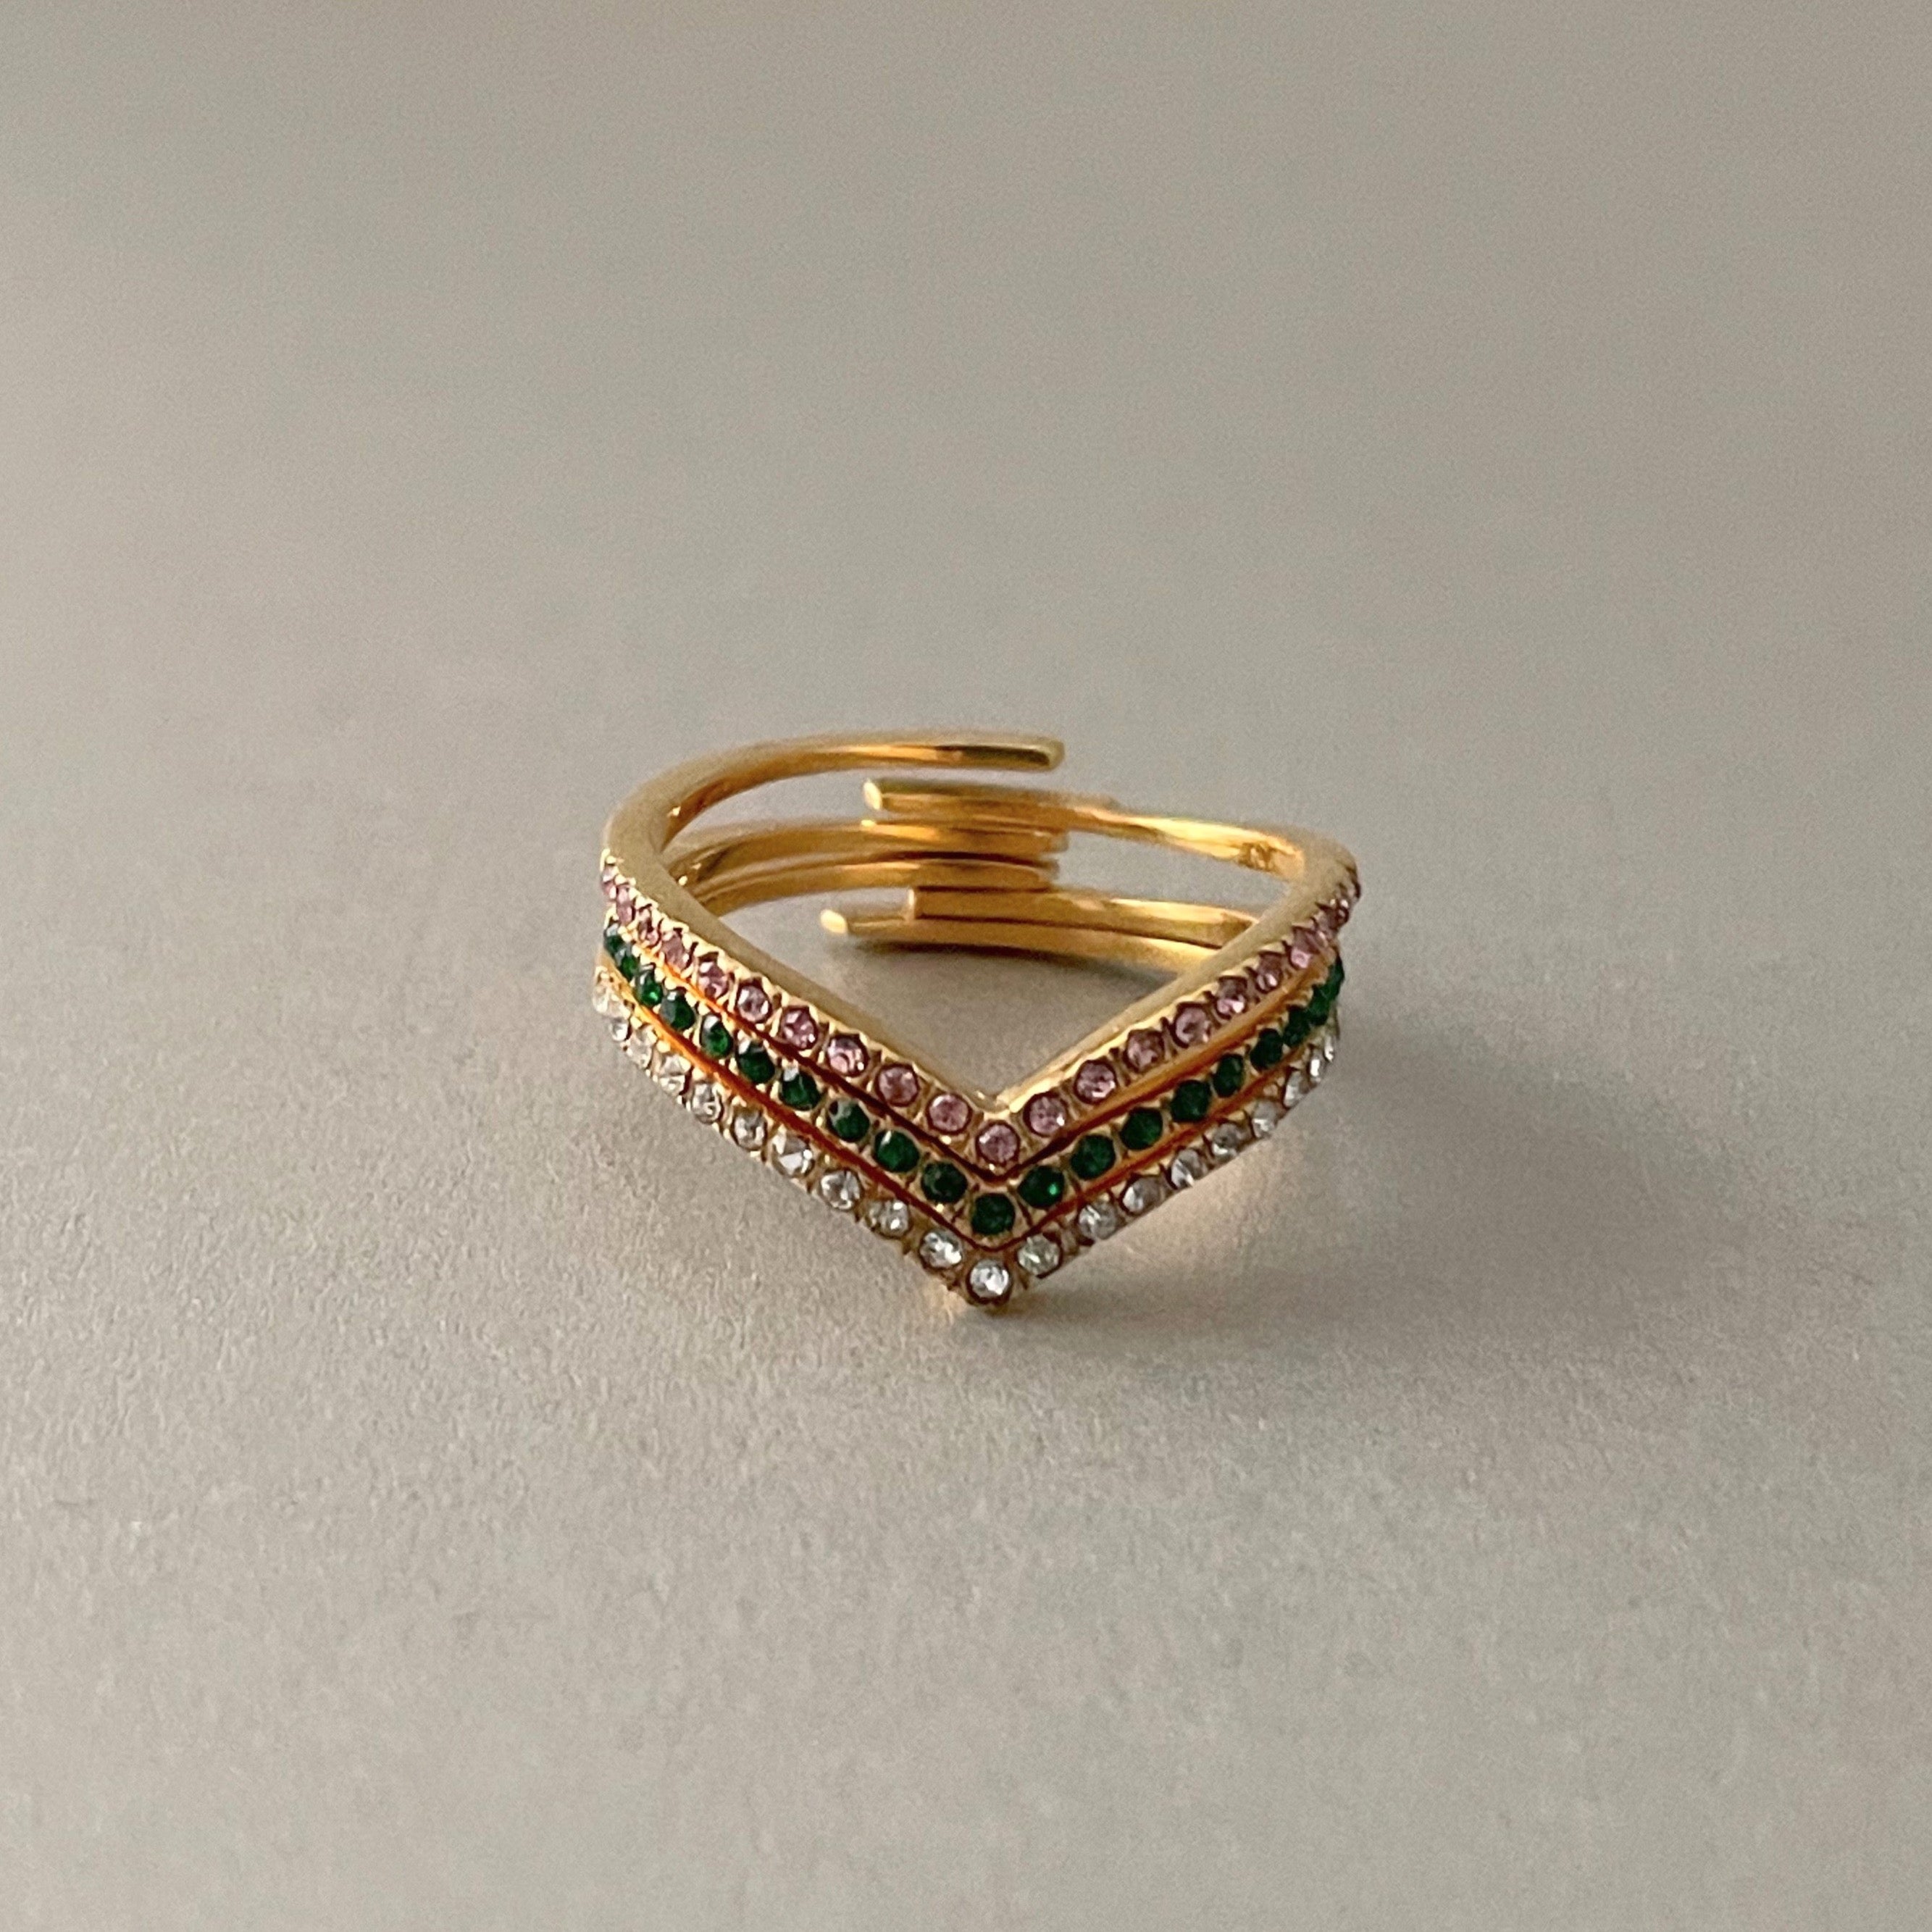 Marina Luxe 18k Gold Plated Skinny Rose Wishbone Ring